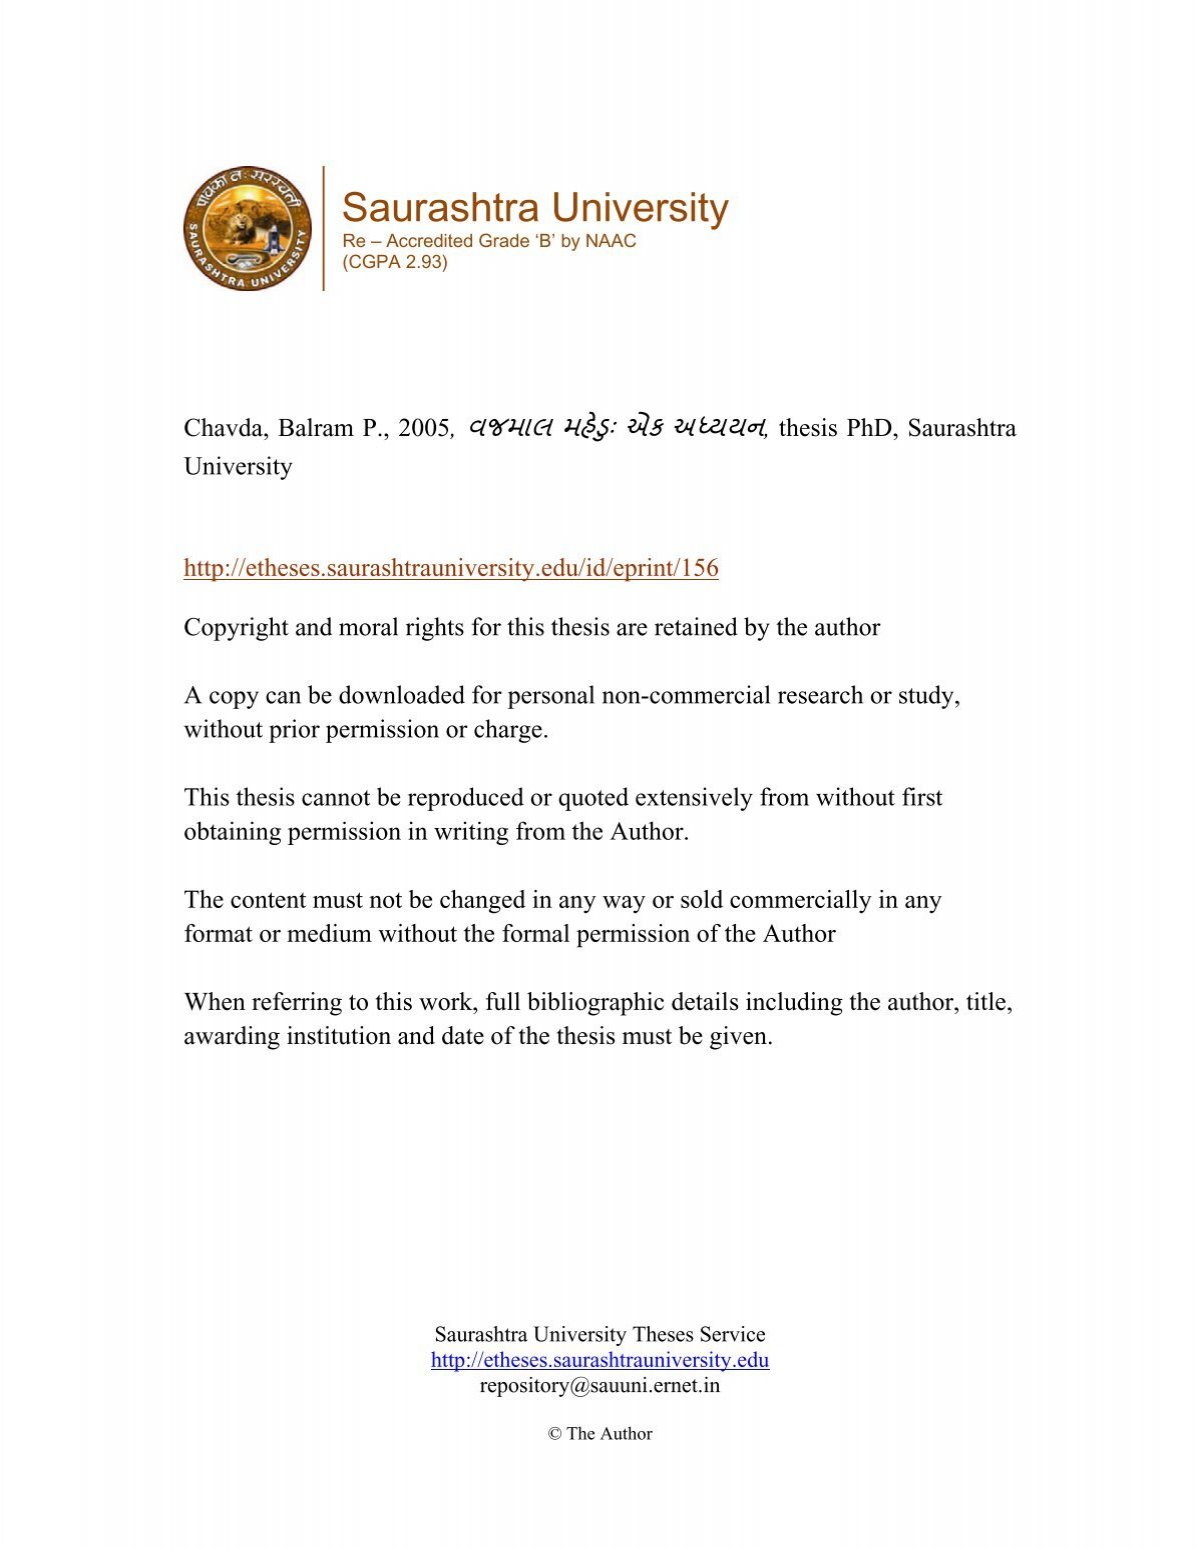 Download 1708kb Etheses Saurashtra University